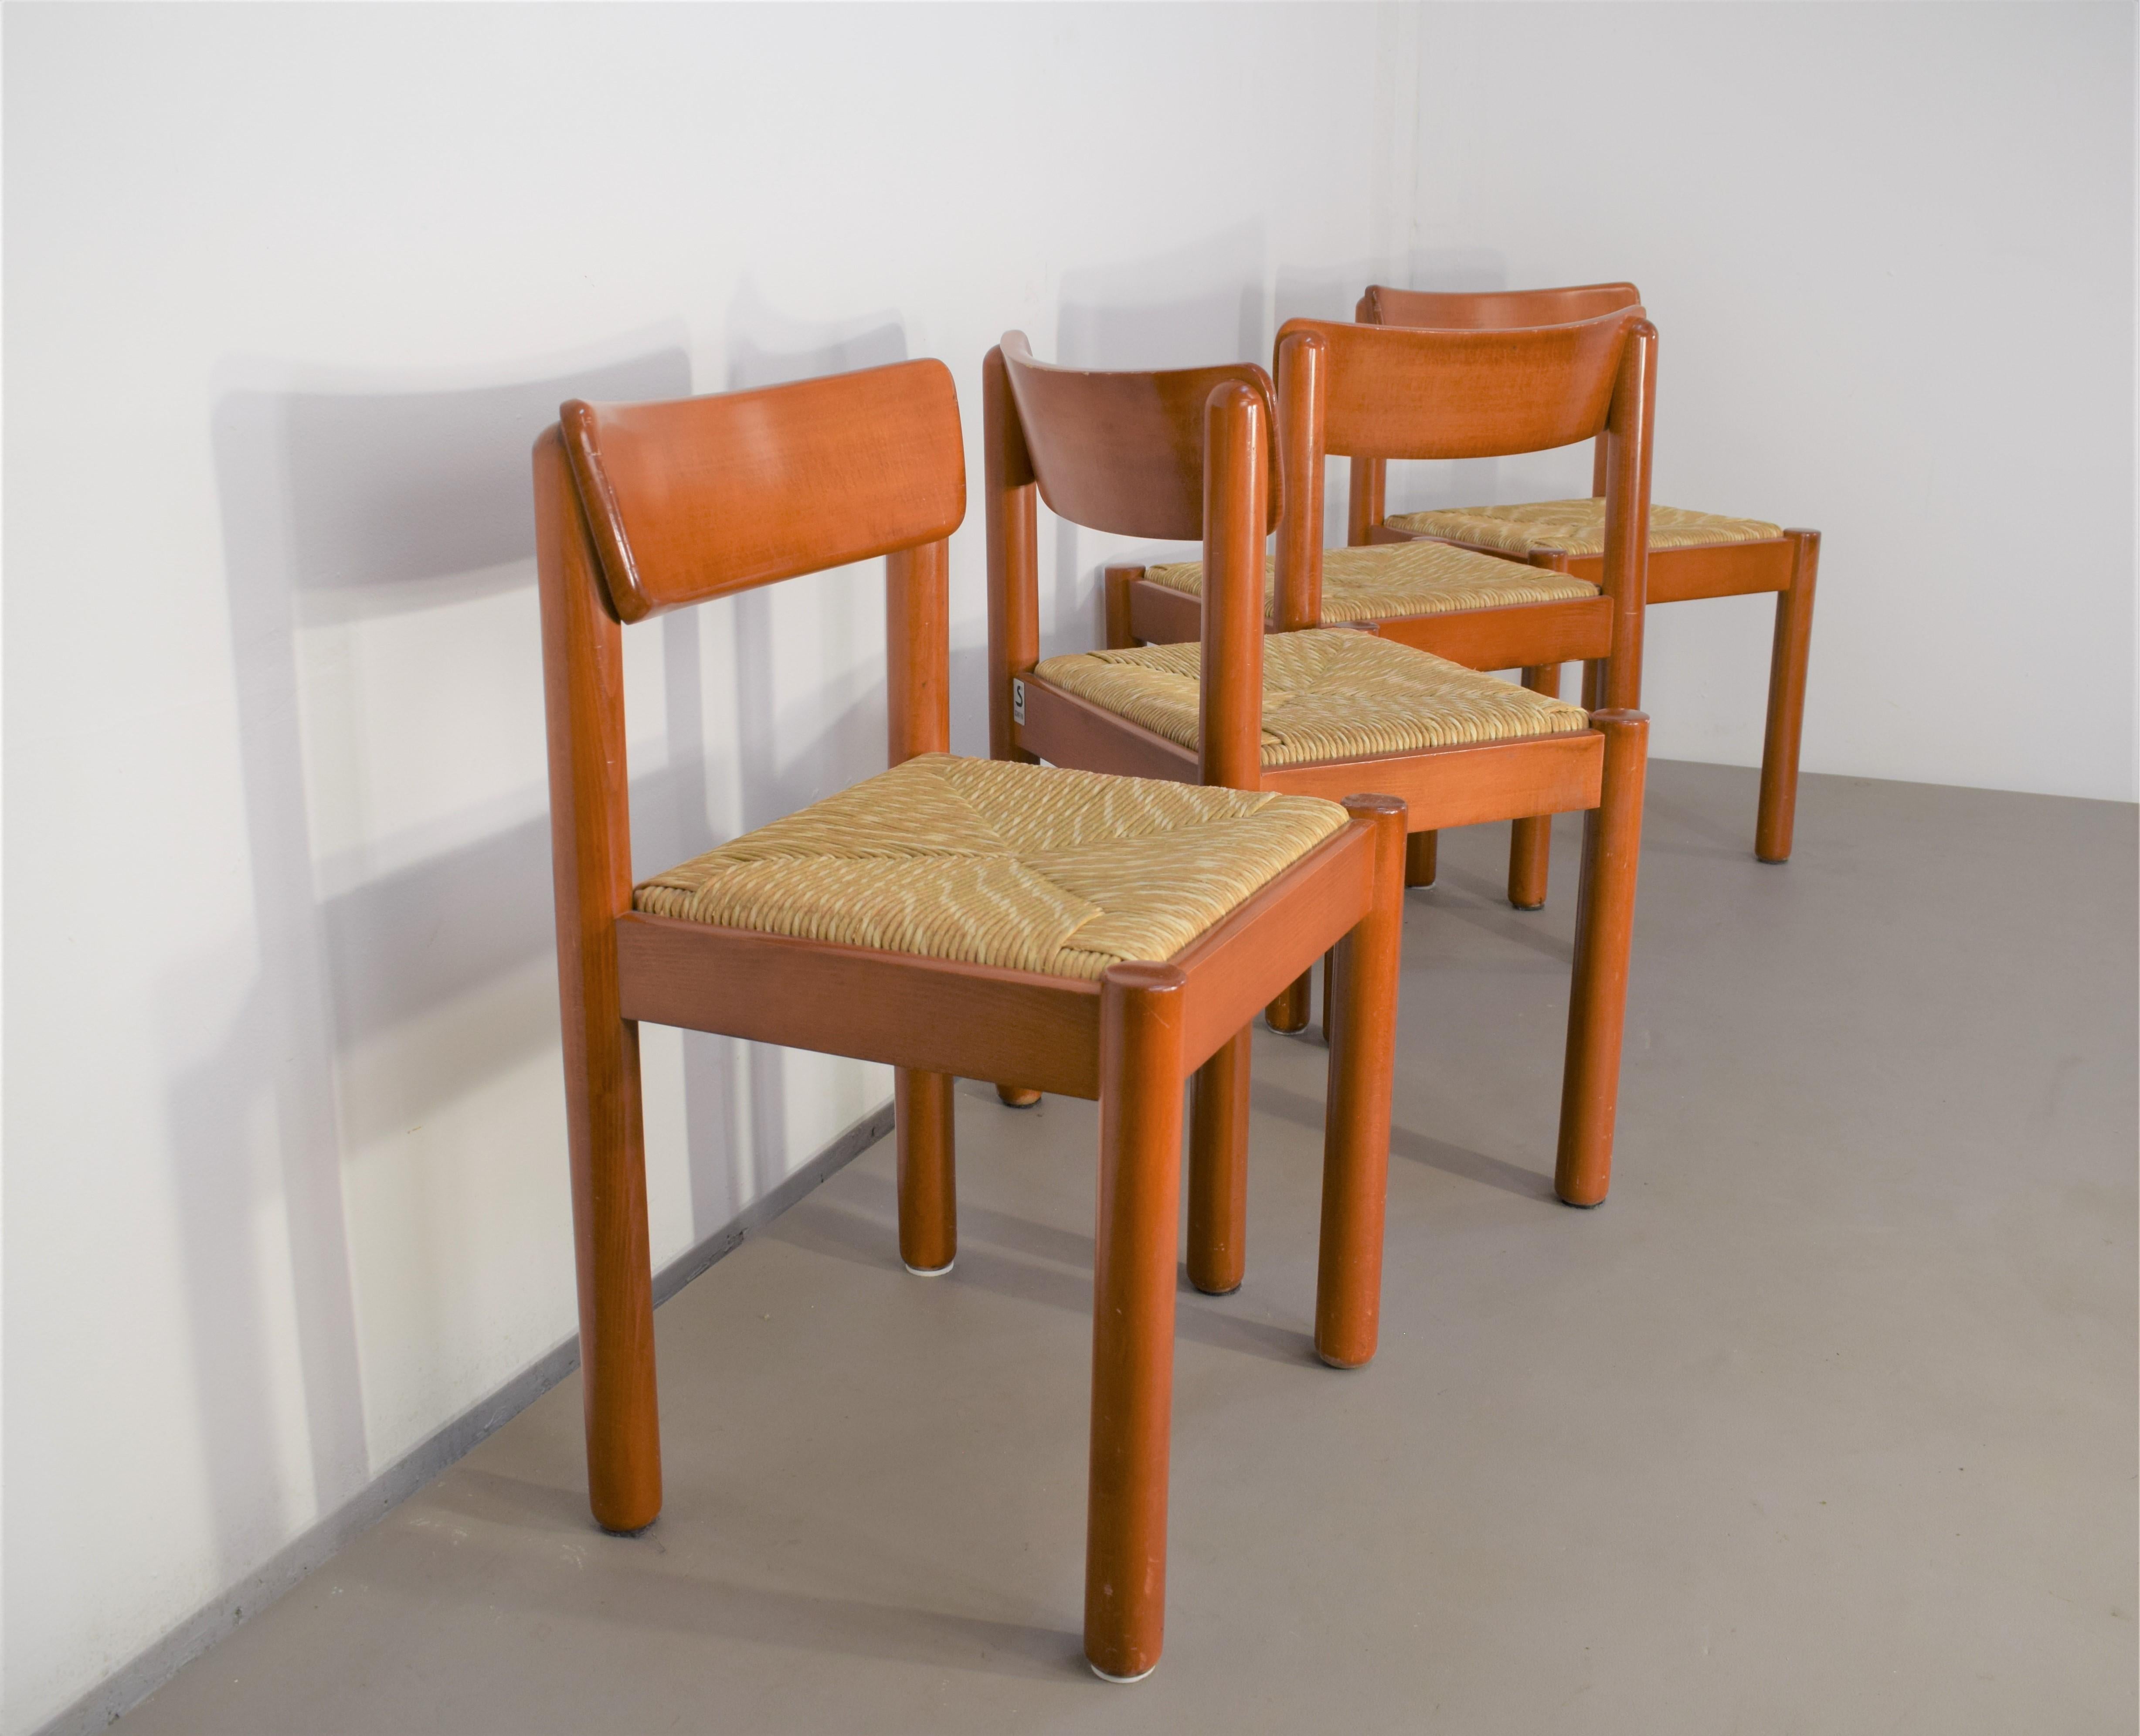 Set of 4 chairs by Vico Magistretti for Schiffini, 1960s.
Dimensions: H= 76 cm; W= 49 cm; D= 46 cm; H seat= 45 cm.